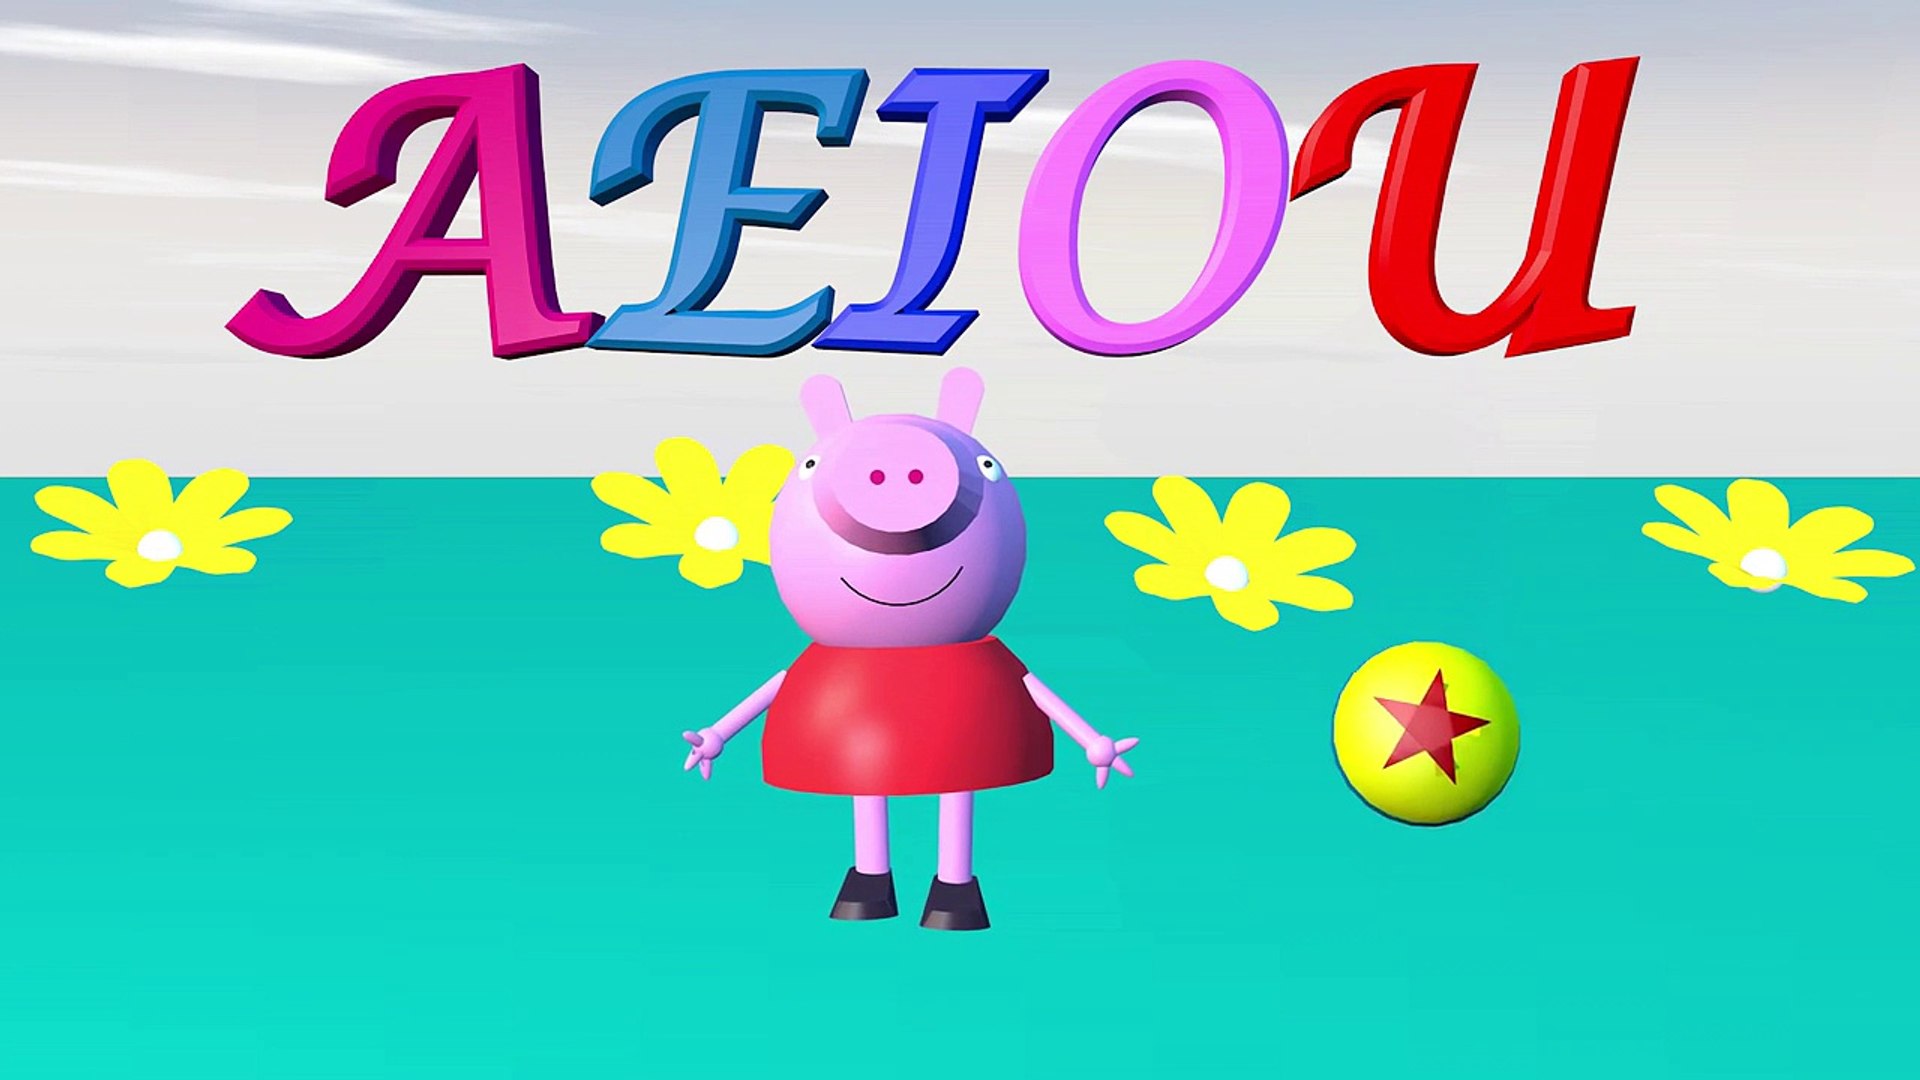 a e i o u las vocales - Las vocales en español para niños - Sílabas para  aprender a leer - AEIOU - Dailymotion Video